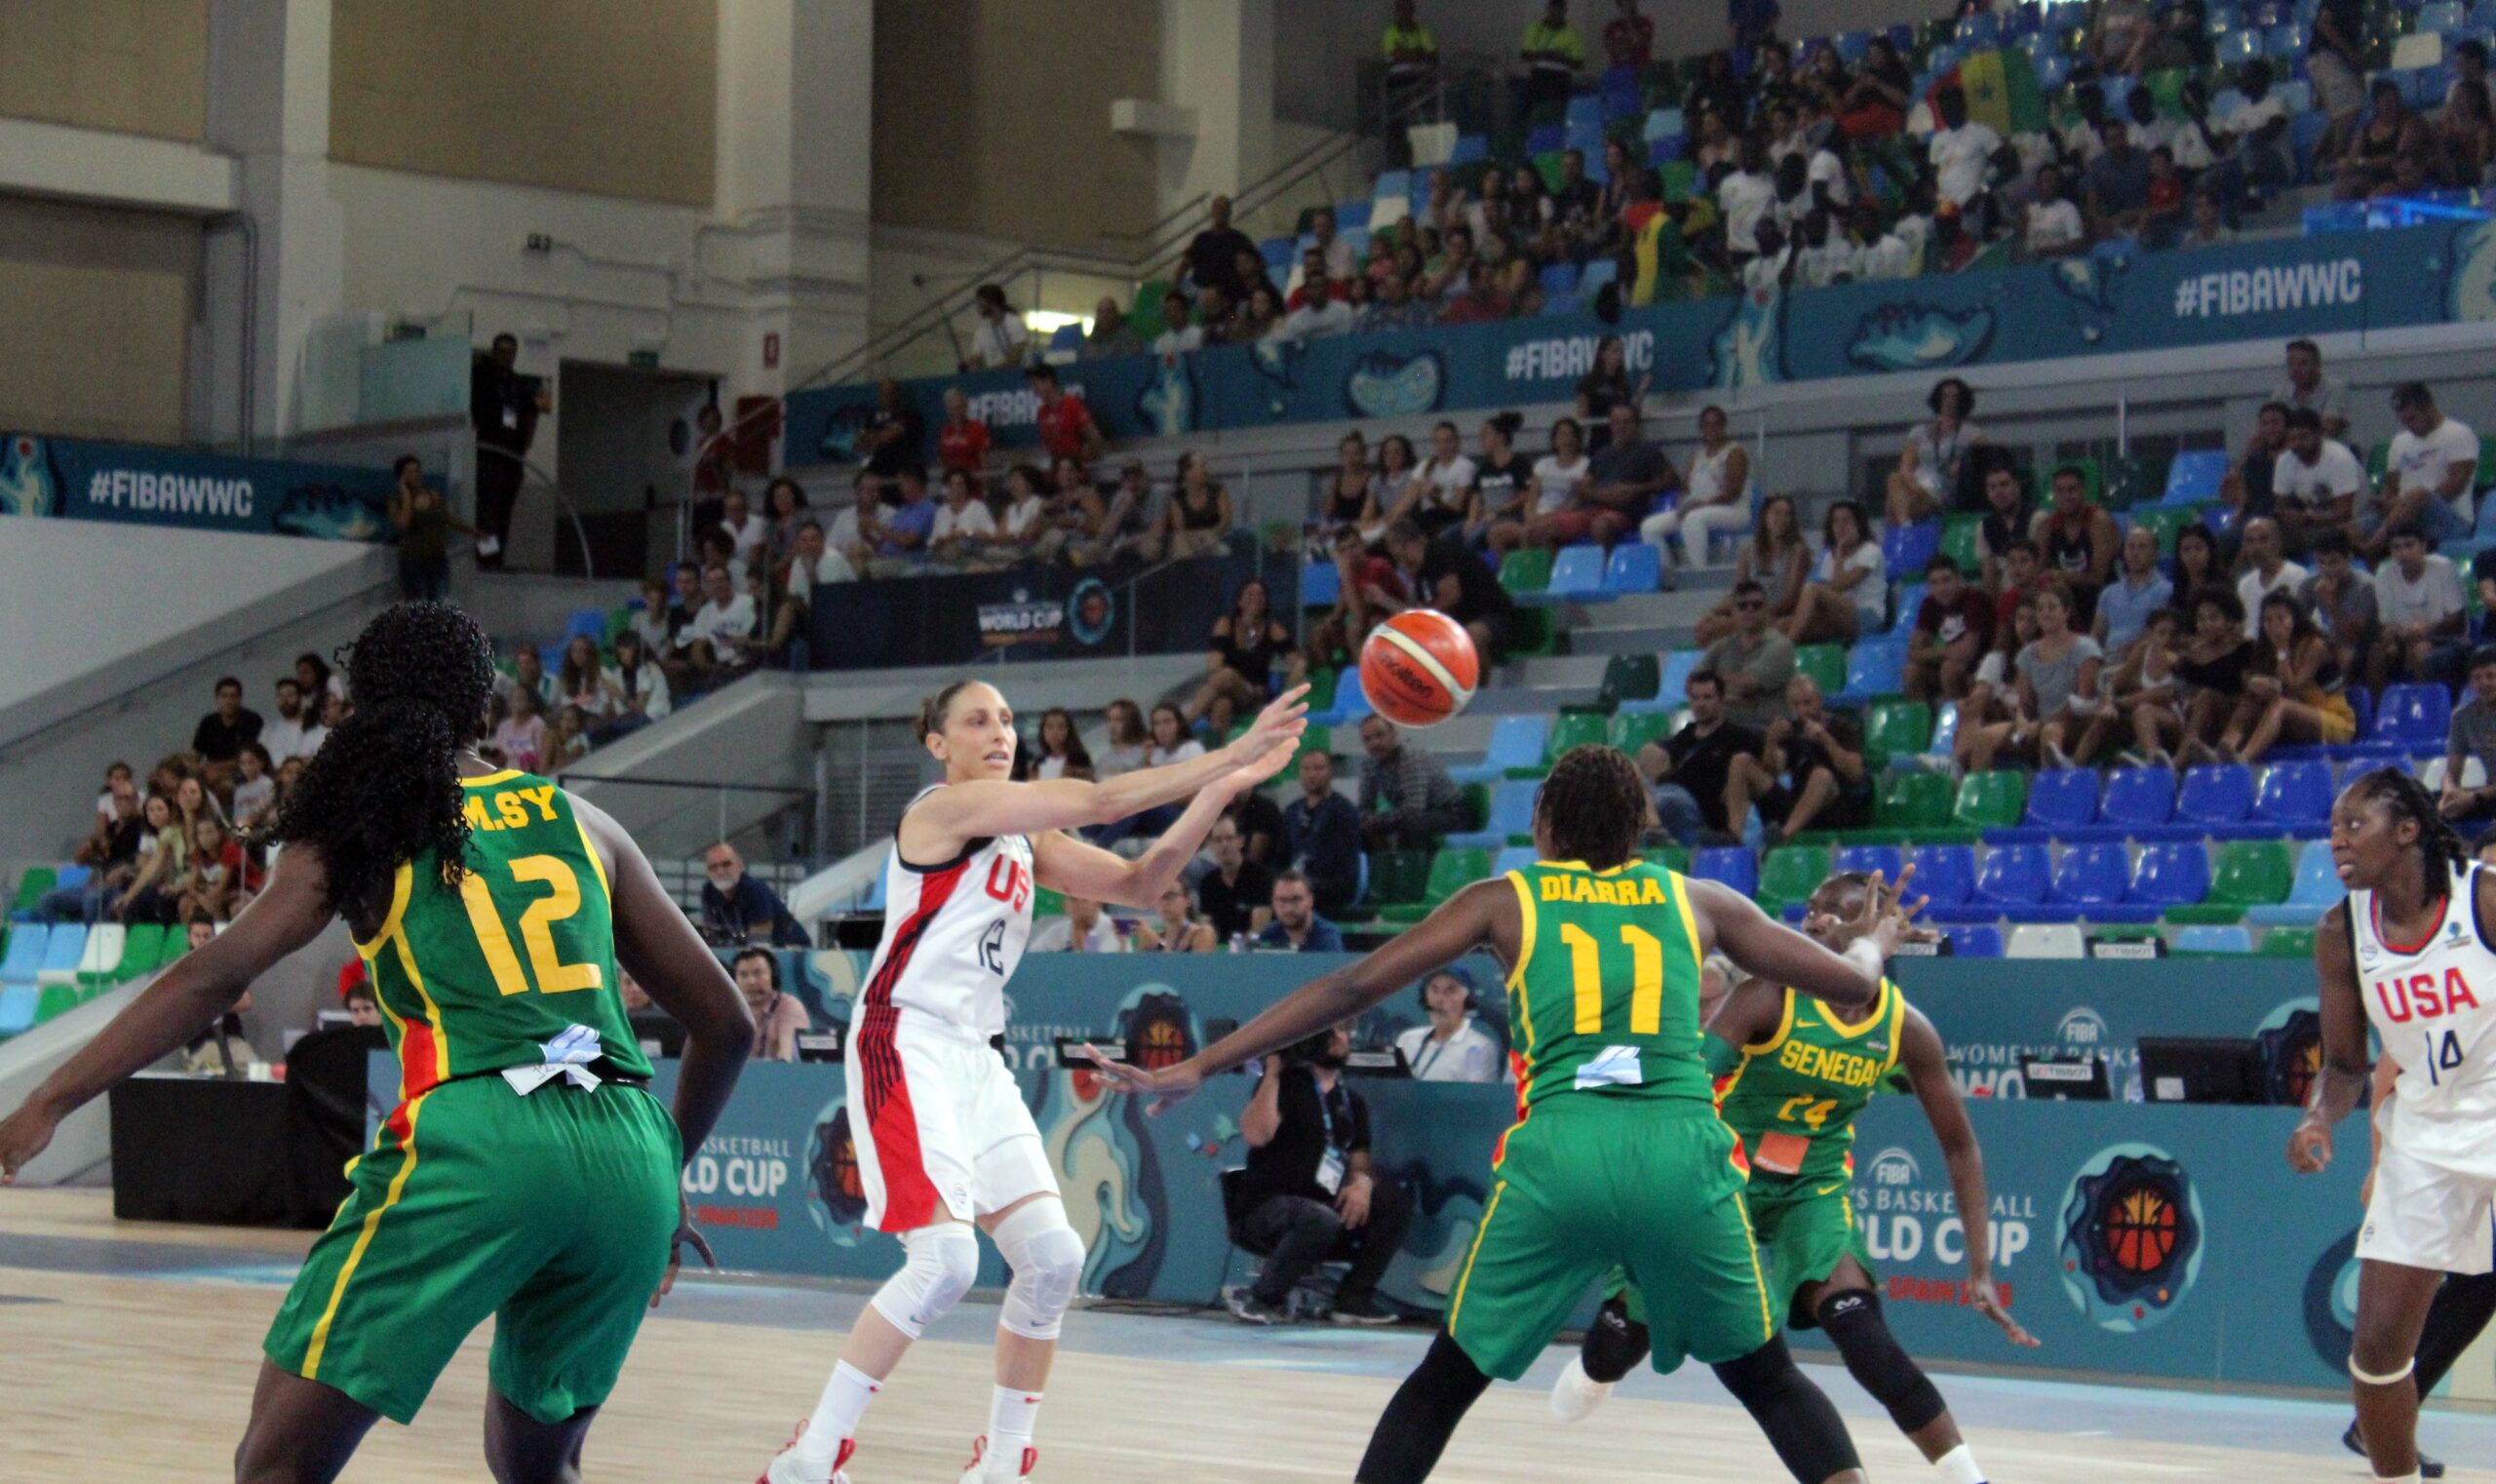 USA tops tough Senegal in FIBA World Cup opener, 87-67